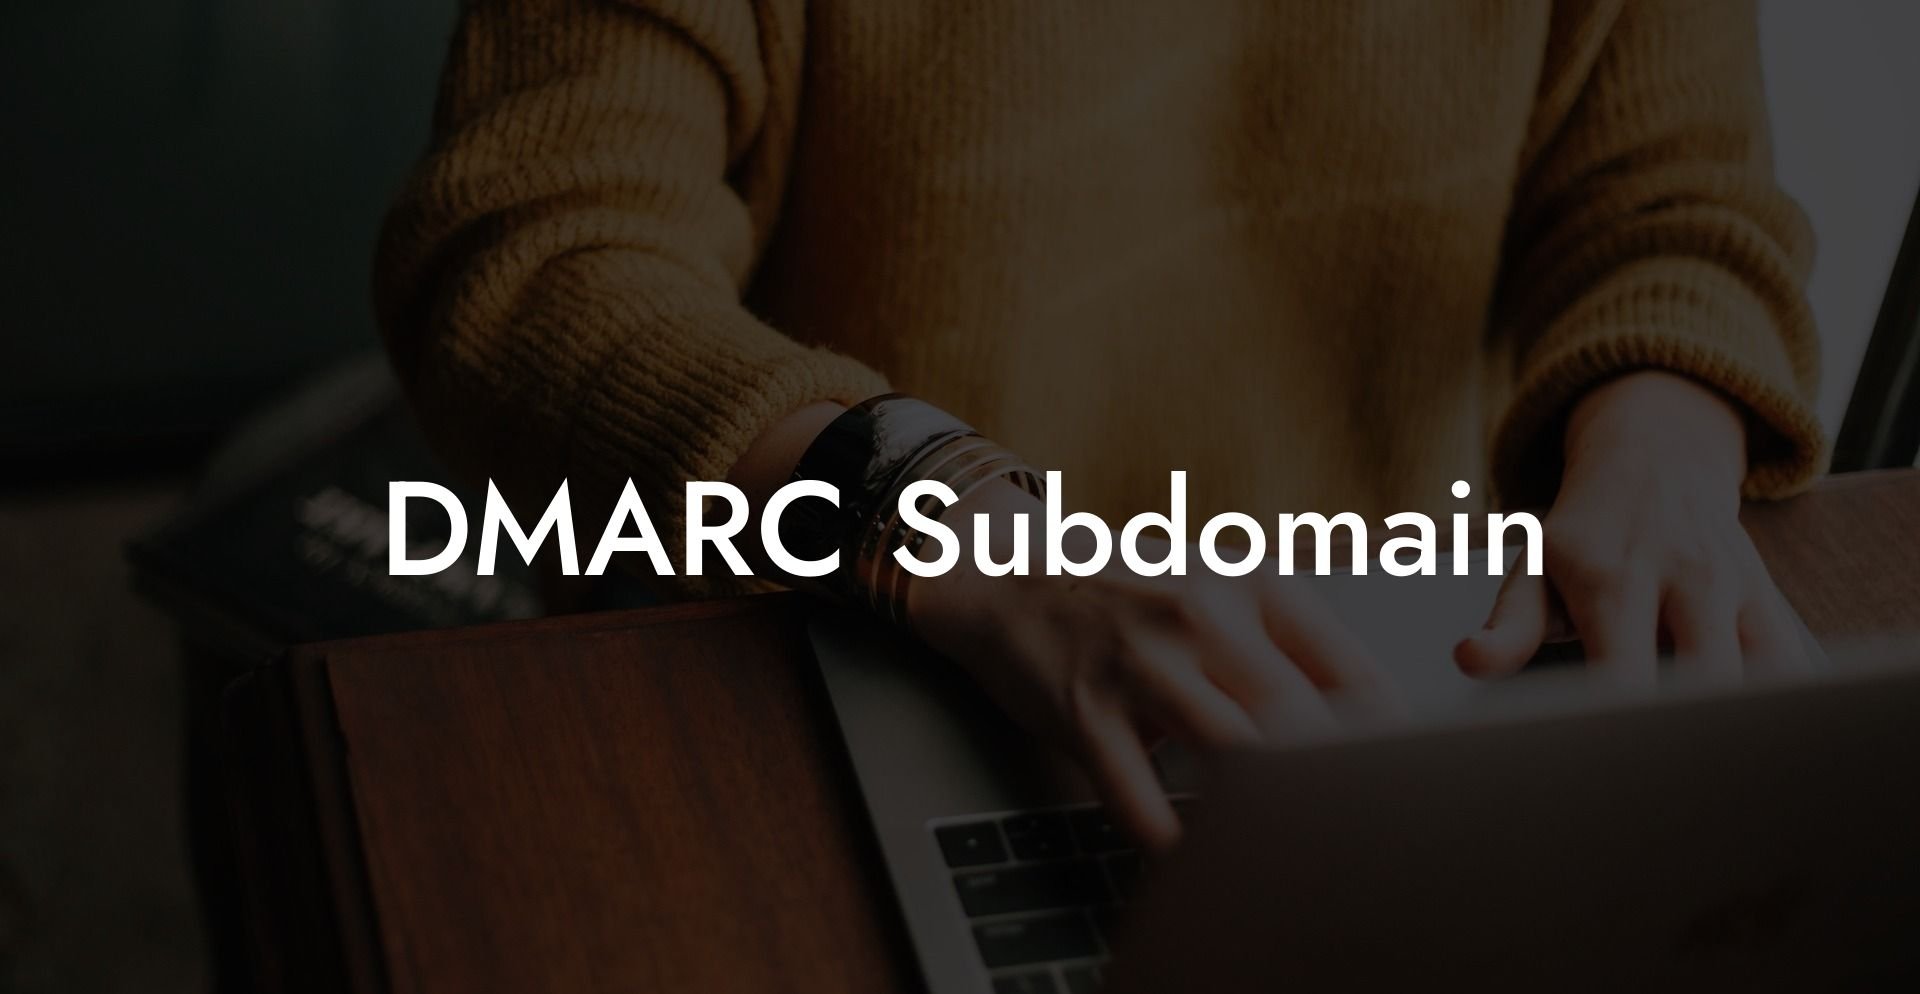 DMARC Subdomain